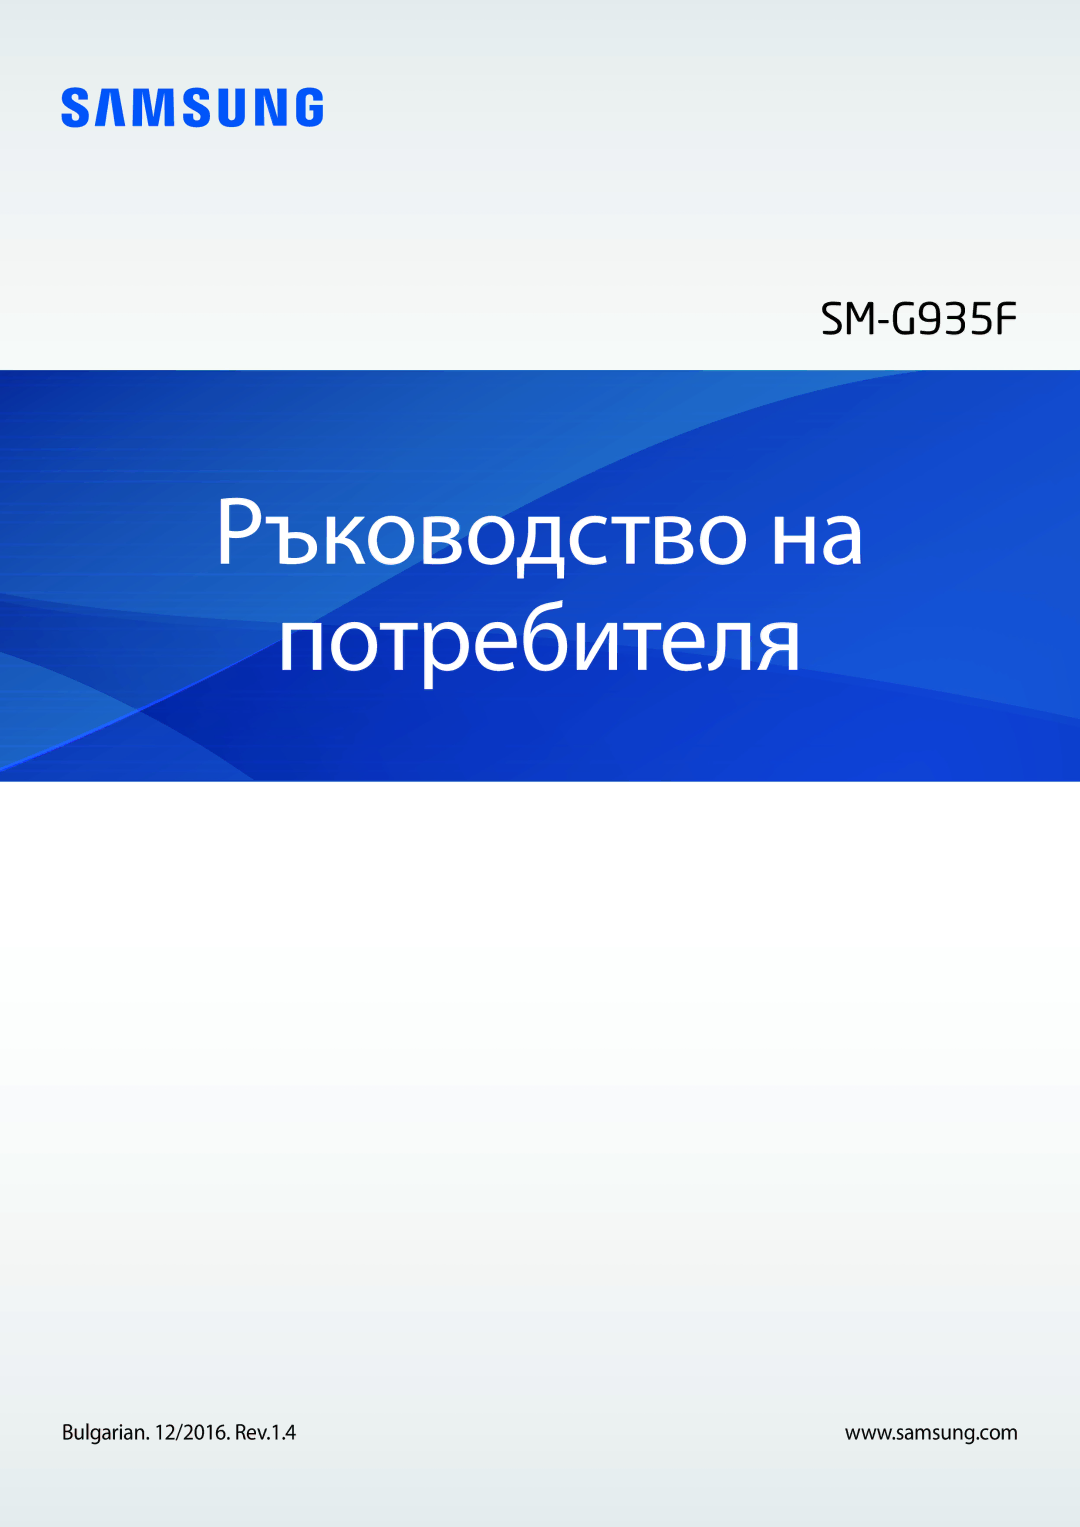 Samsung SM-G935FZDABGL manual Ръководство на Потребителя, Bulgarian /2016. Rev.1.4 